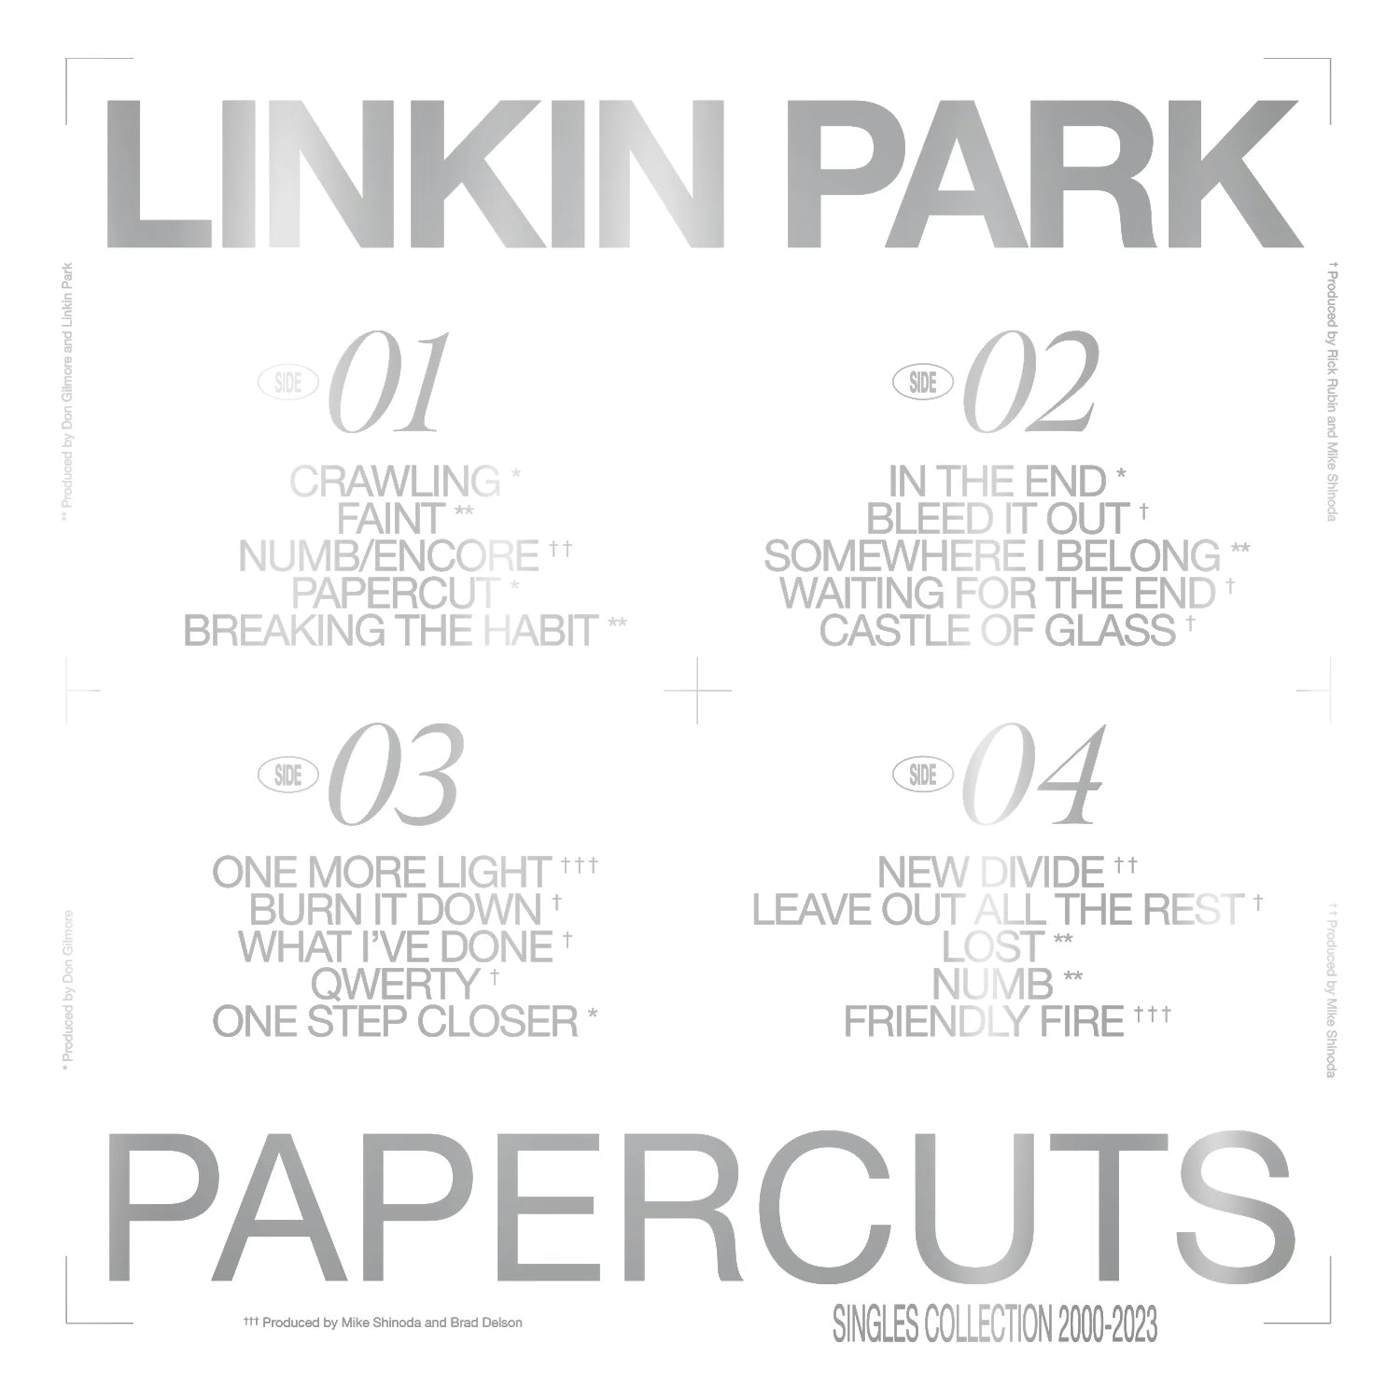 Linkin Park PAPERCUTS LIMITED EDITION SKY BLUE & TANGERINE SPLATTER VINYL 2LP